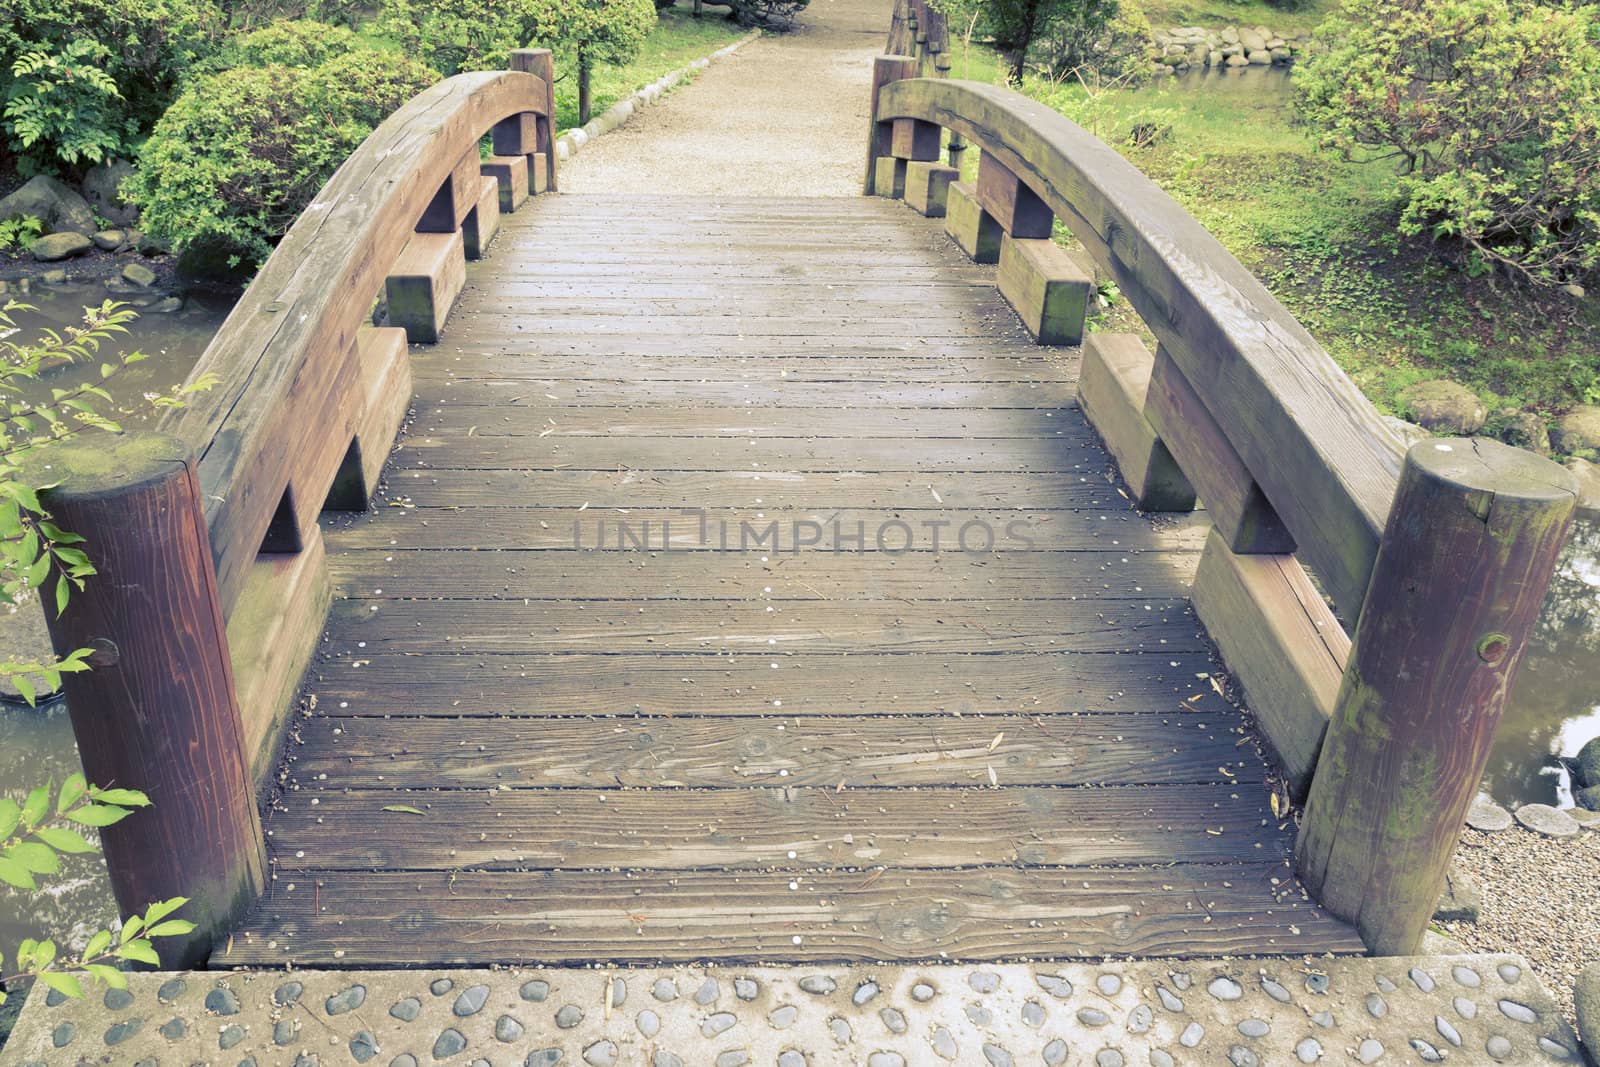 straight pathway through scenic wooden bridge